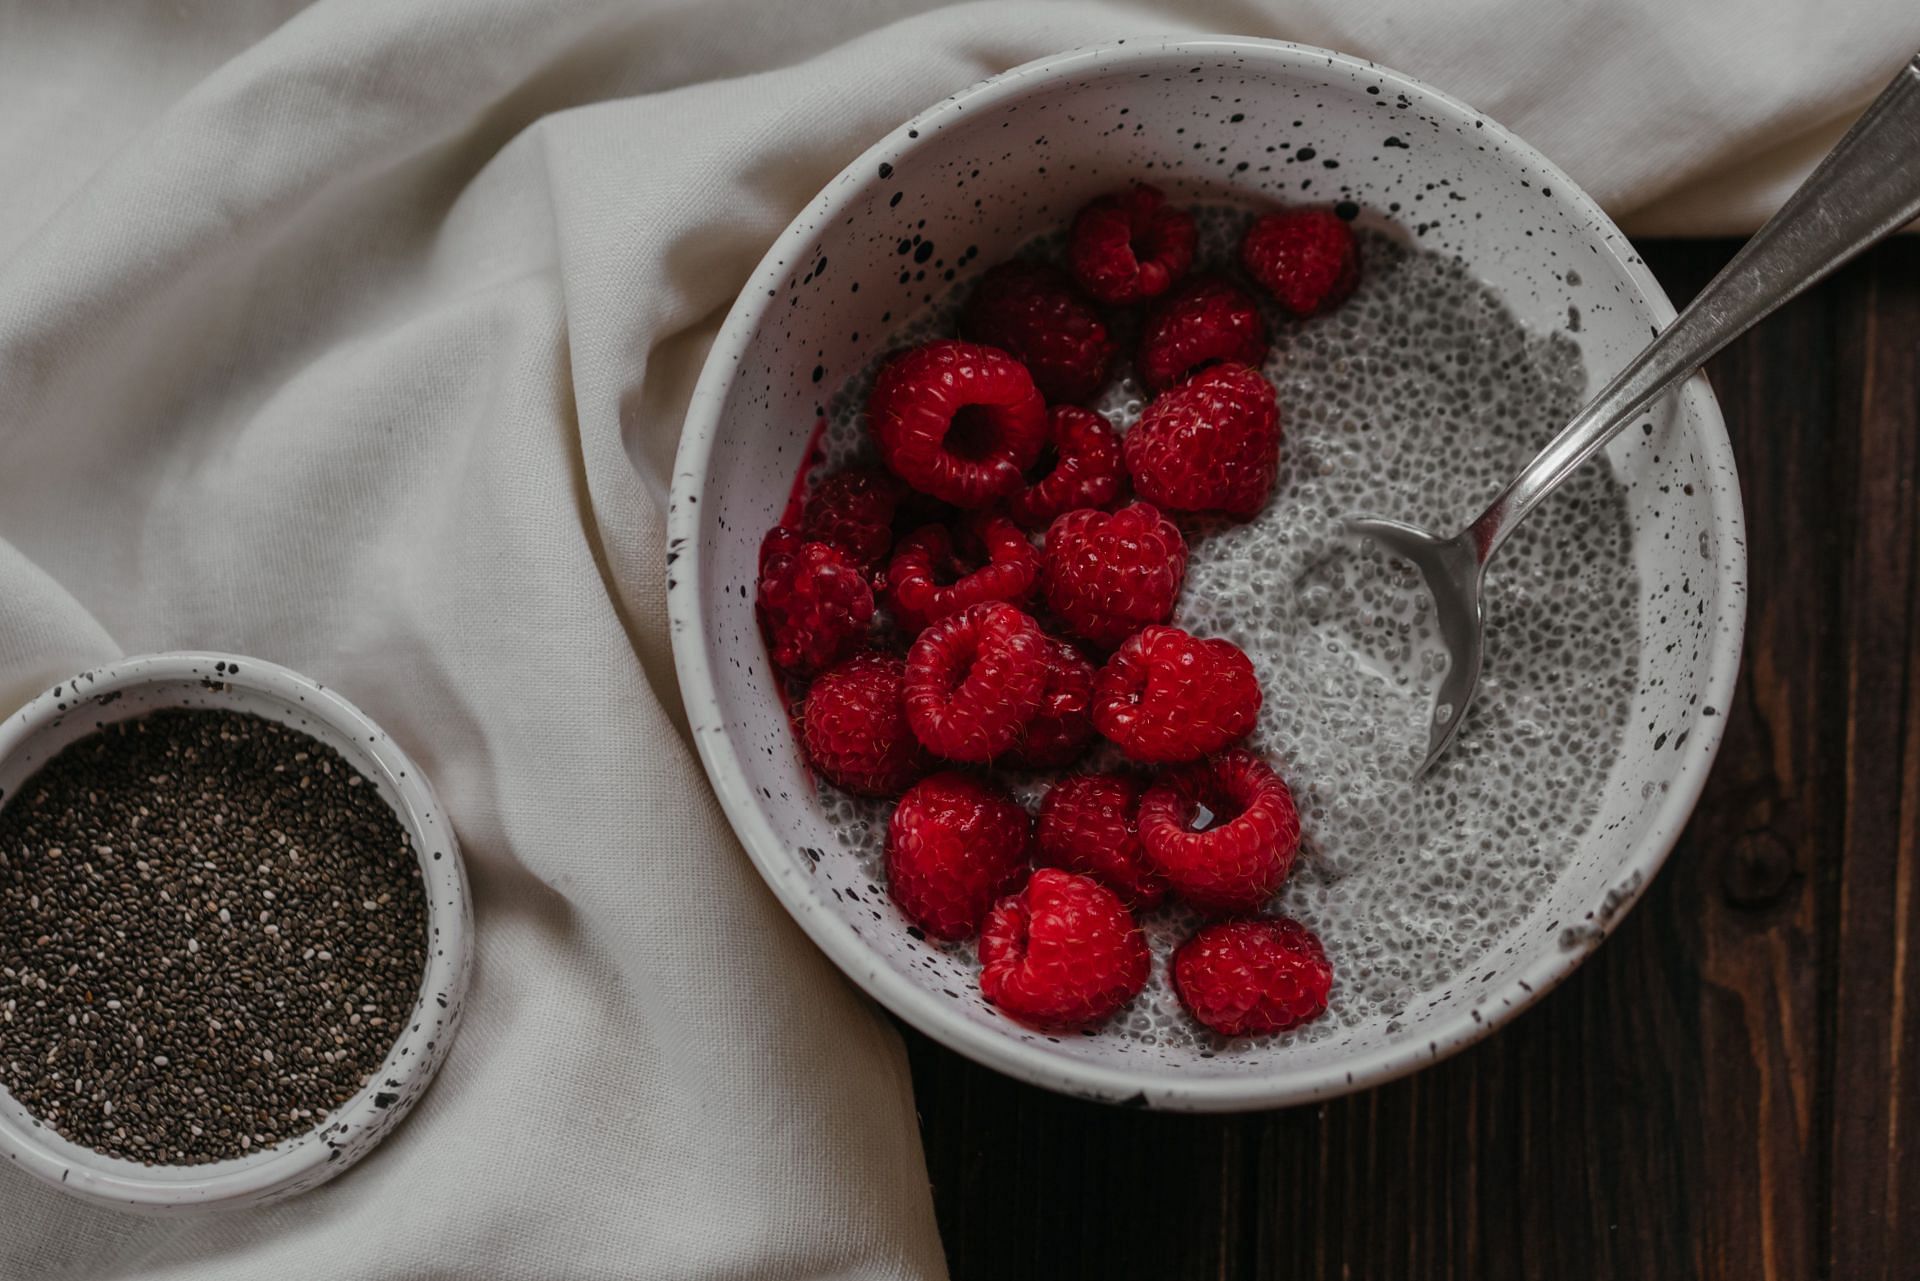 Chia pudding topped with berries. (Image via Pexels/ Polina Kovaleva)